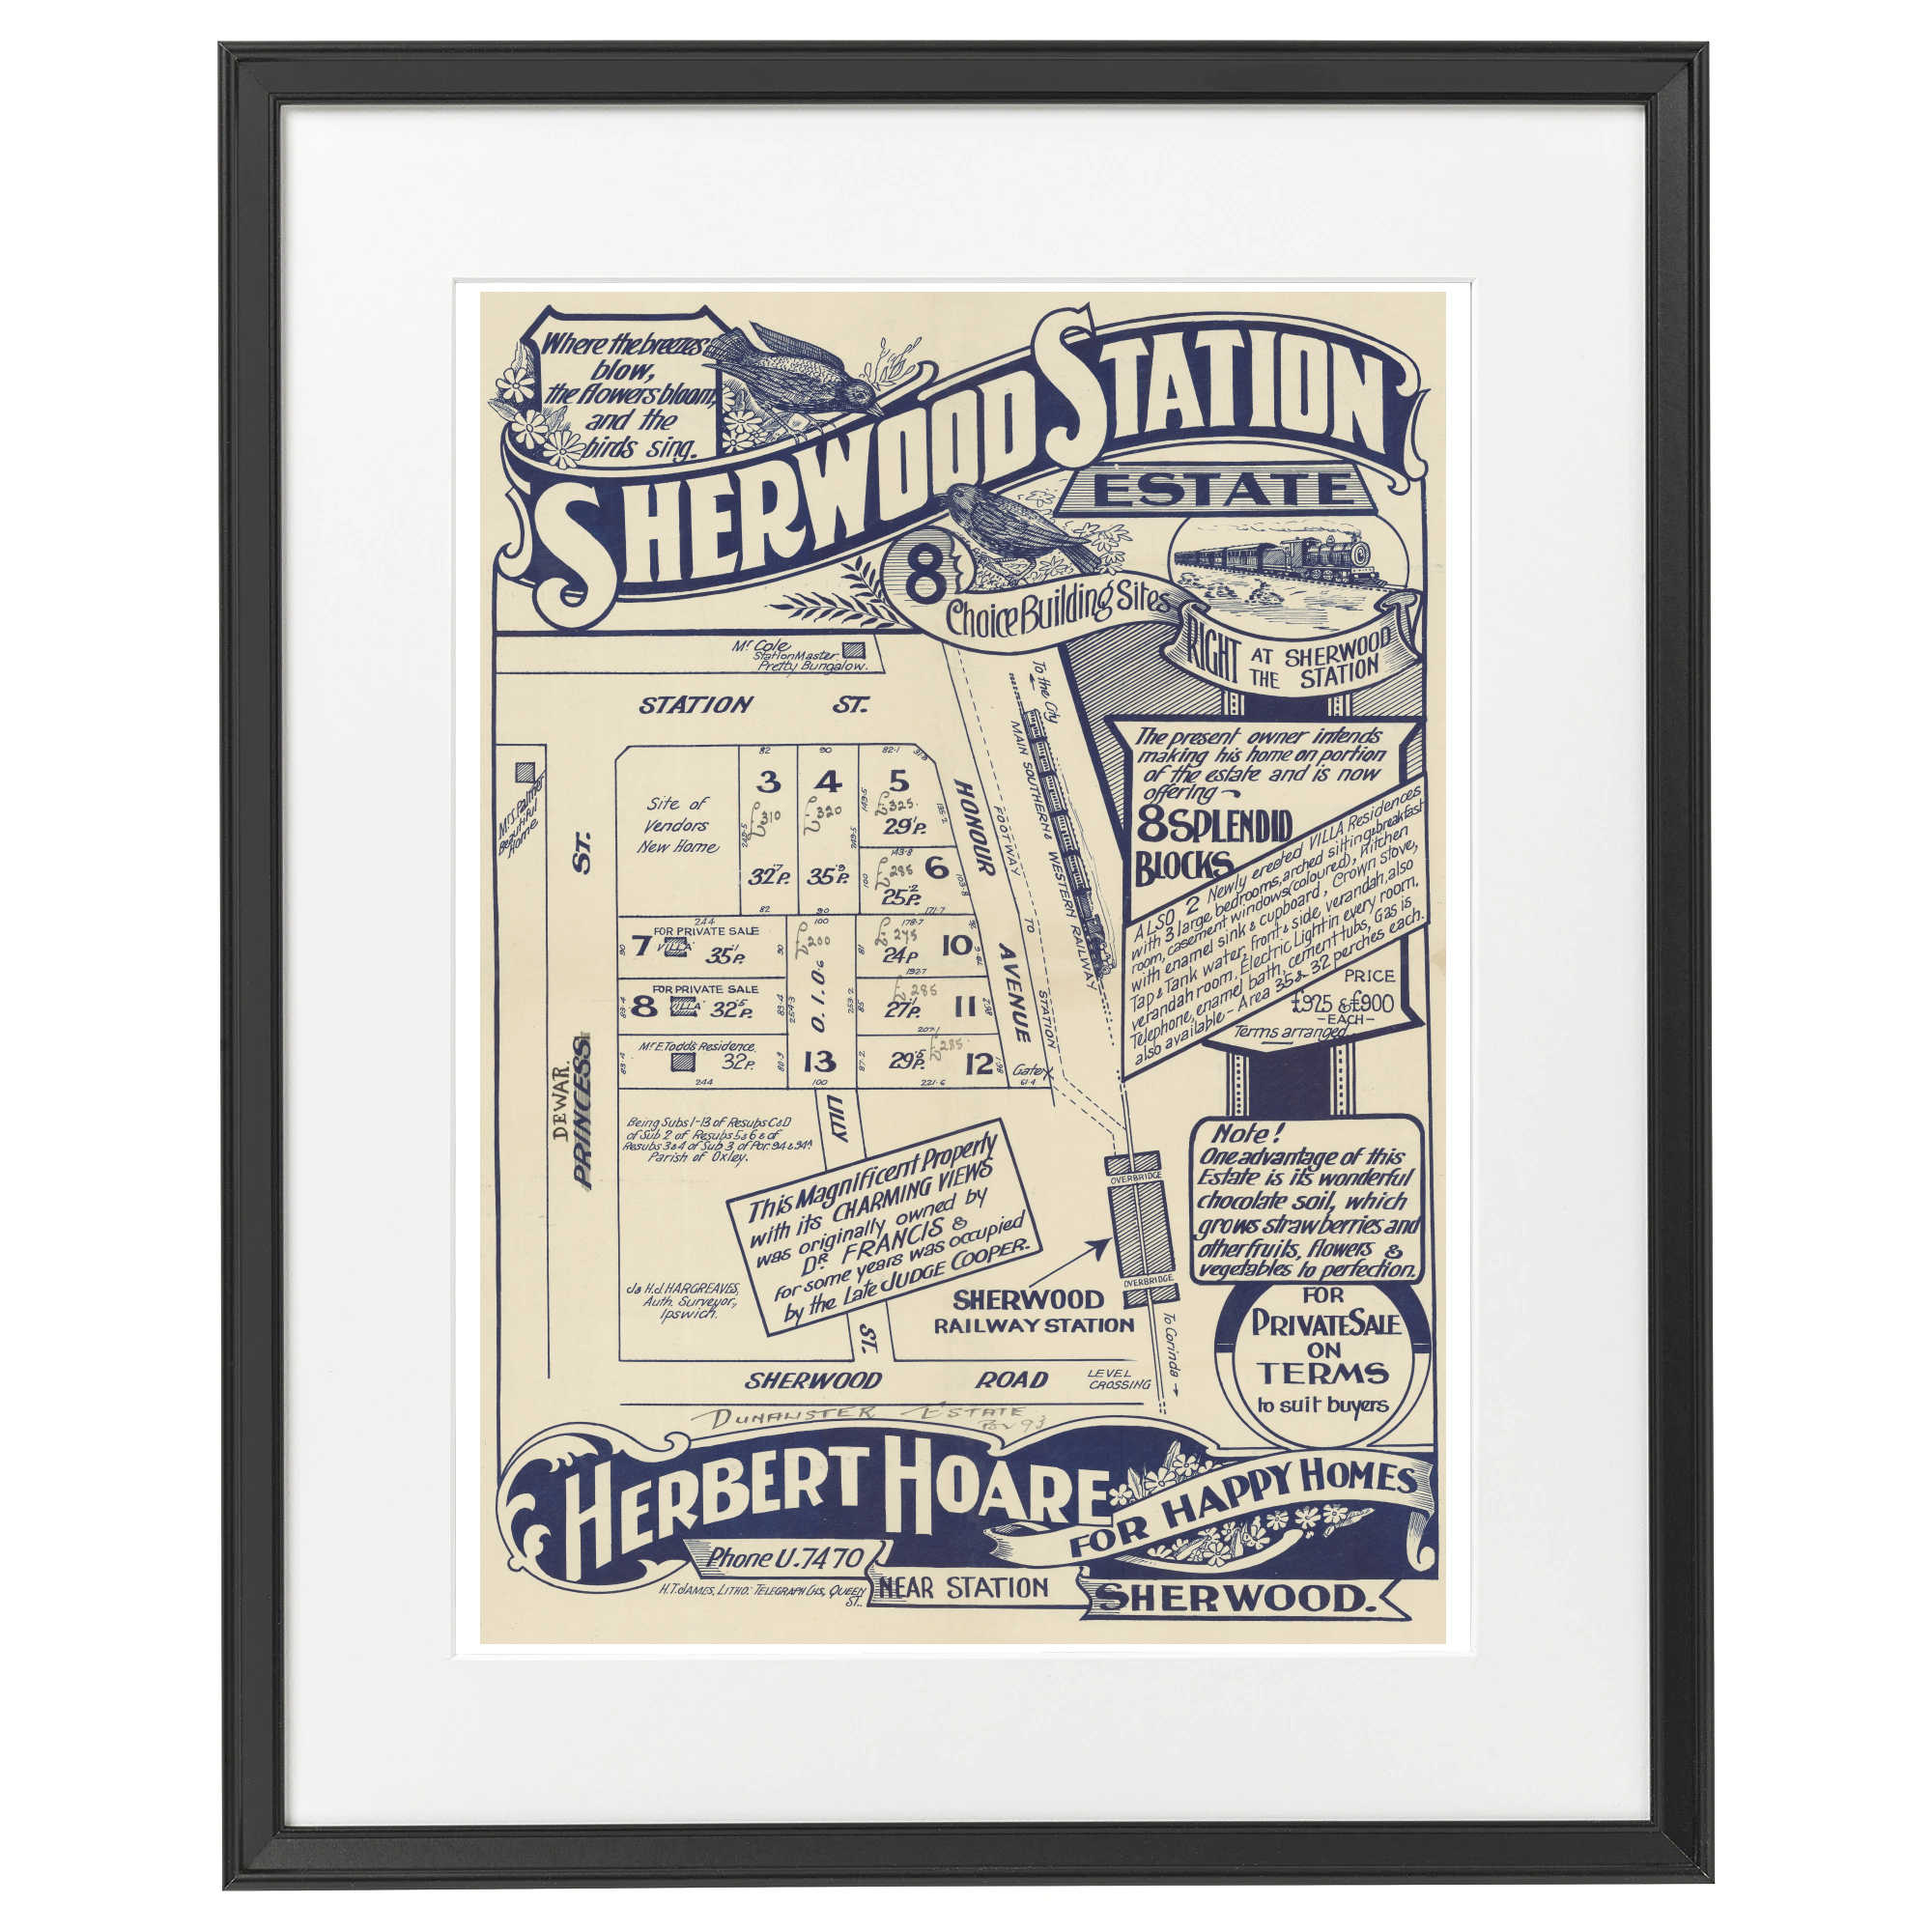 1929 Sherwood - Sherwood Station Estate - 92 years old today